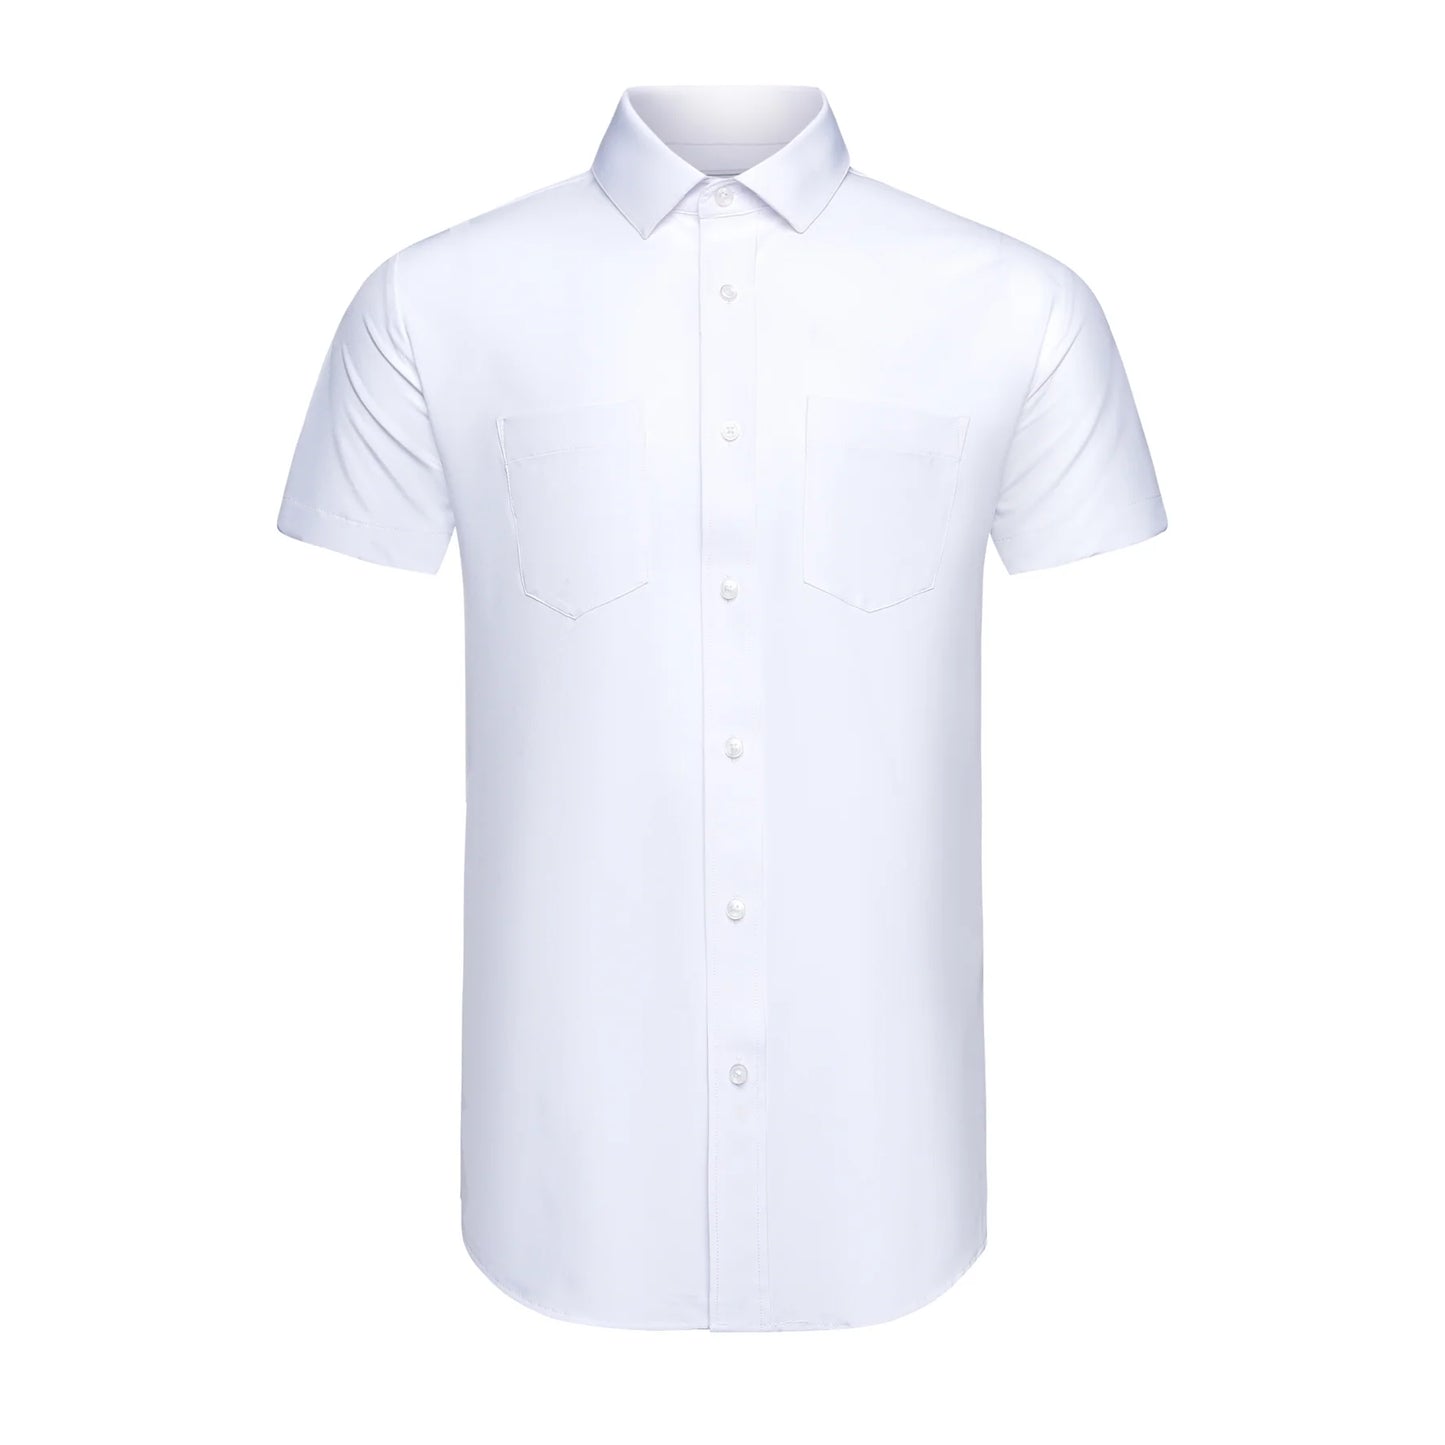 Phenom Classic White Dress Shirt Short/Long Sleeve